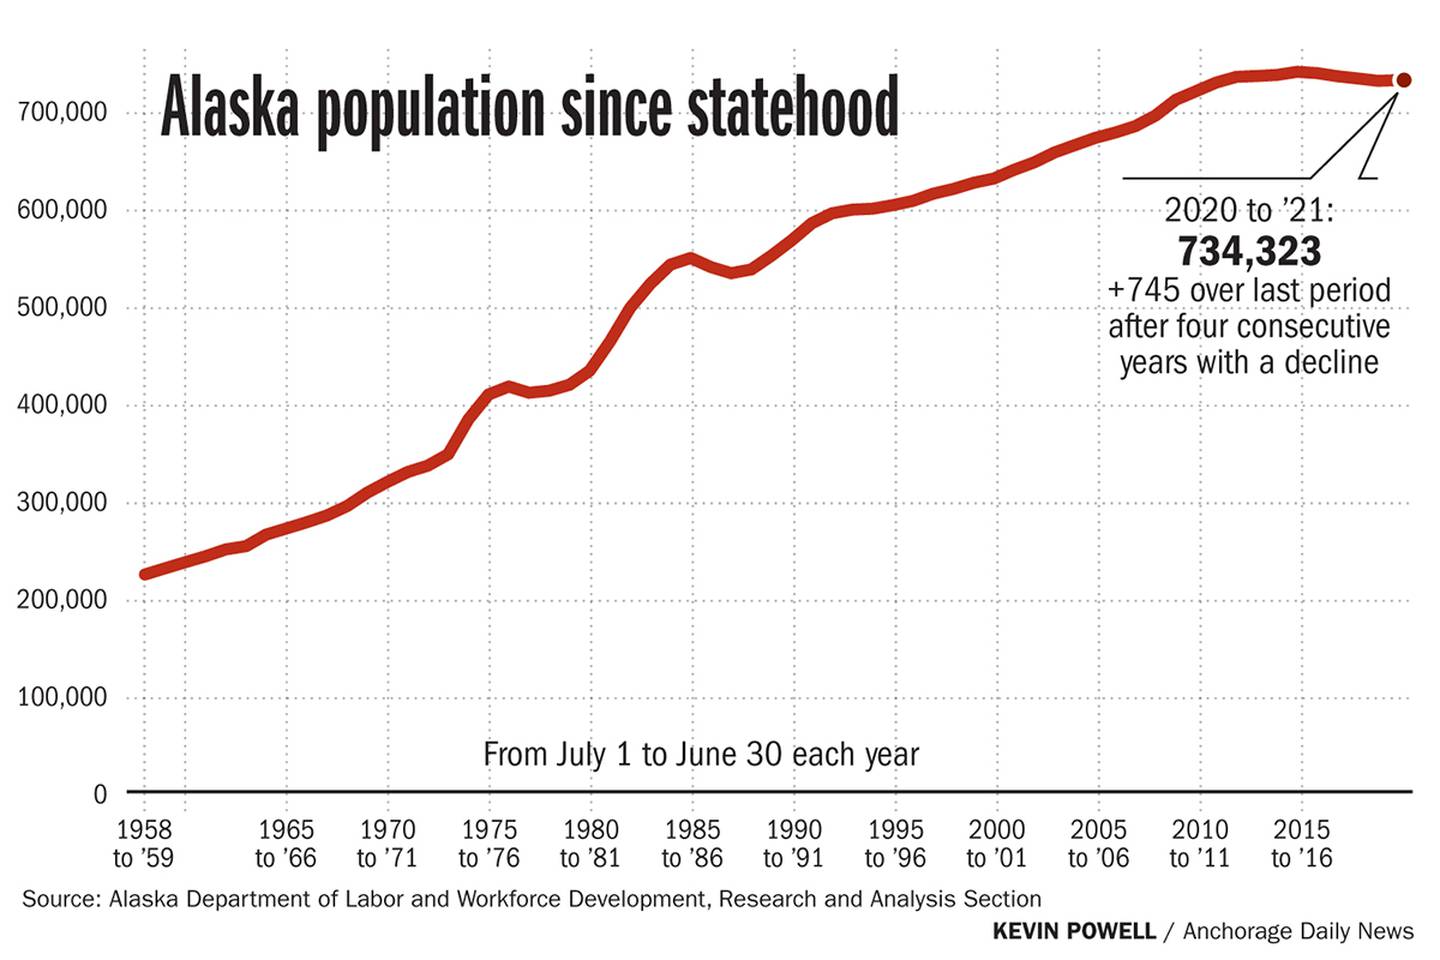 Alaska population since statehood